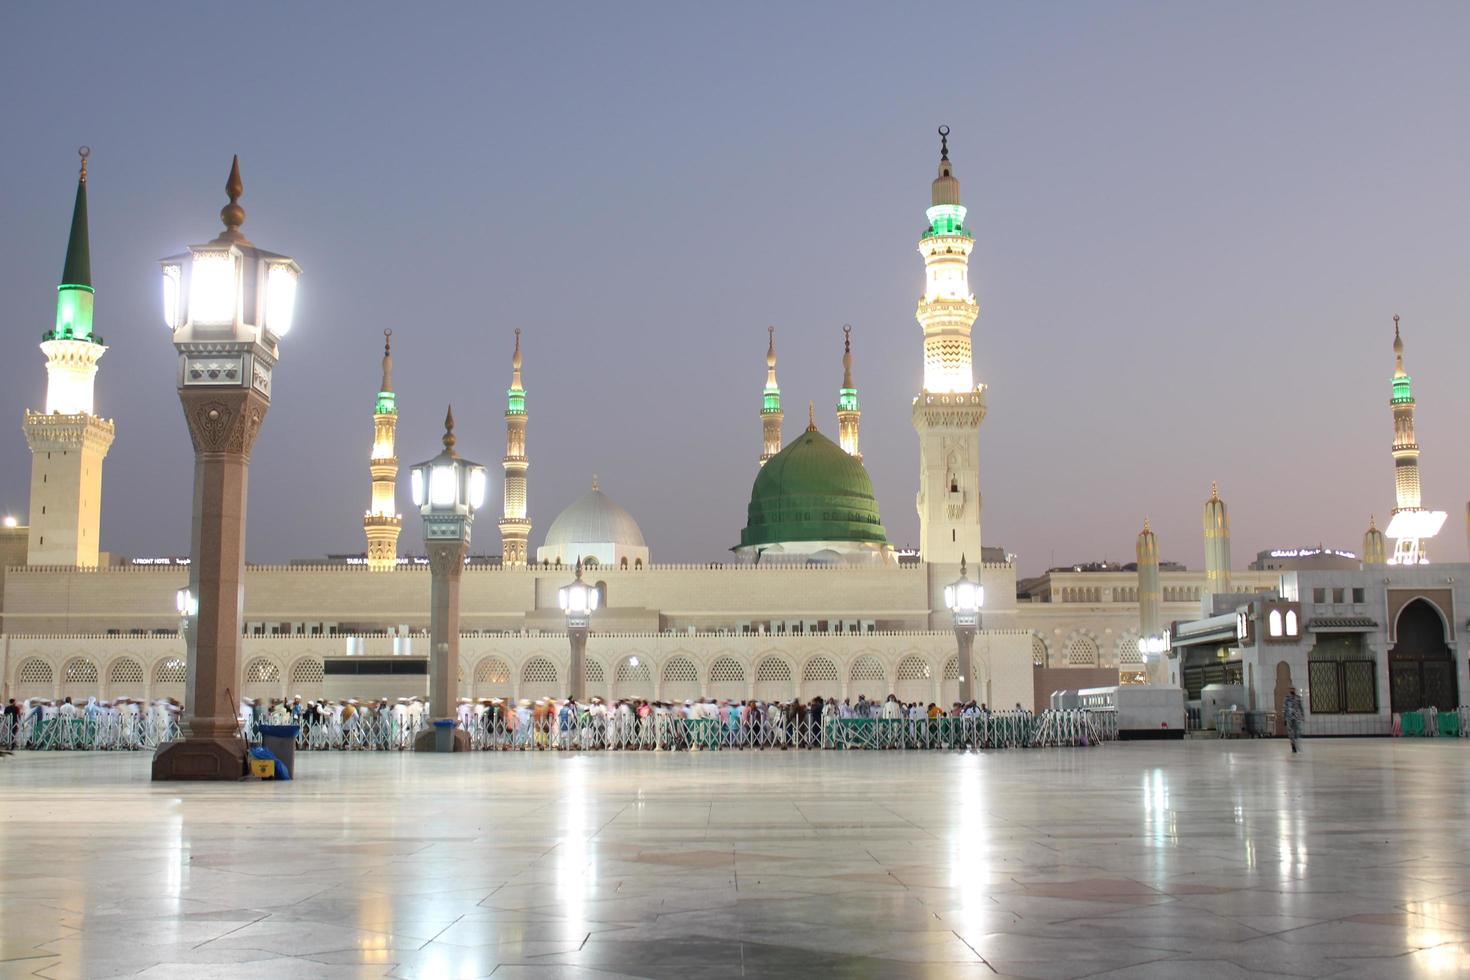 medina, saudi Arabië, okt 2022 - mooi ochtend- visie van masjid al nabawi, medina's groen koepel, minaretten en moskee binnenplaats. foto